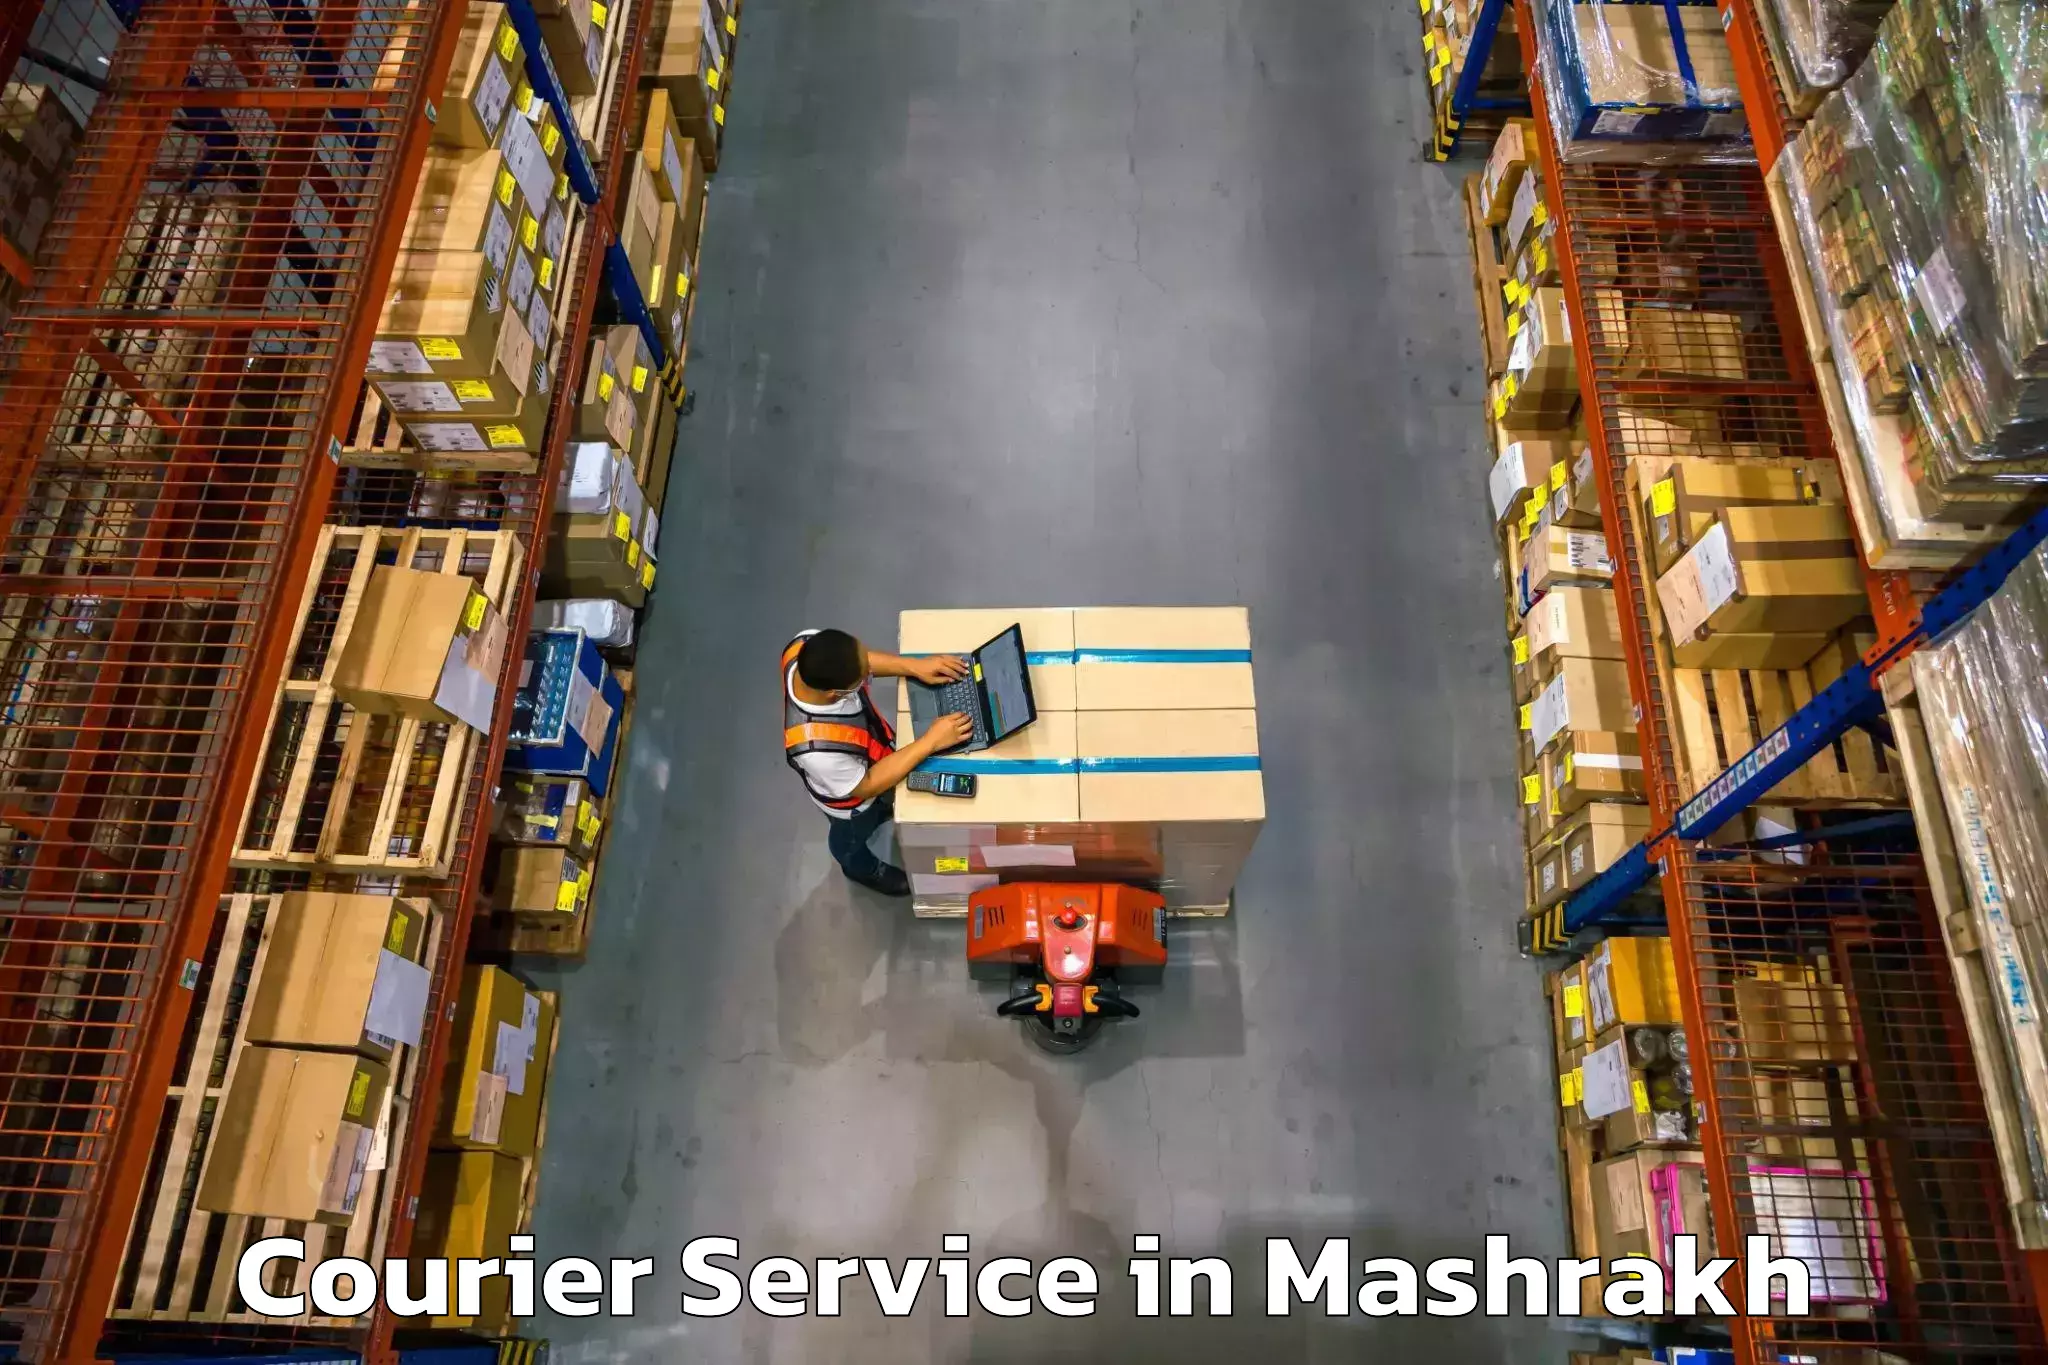 Efficient order fulfillment in Mashrakh